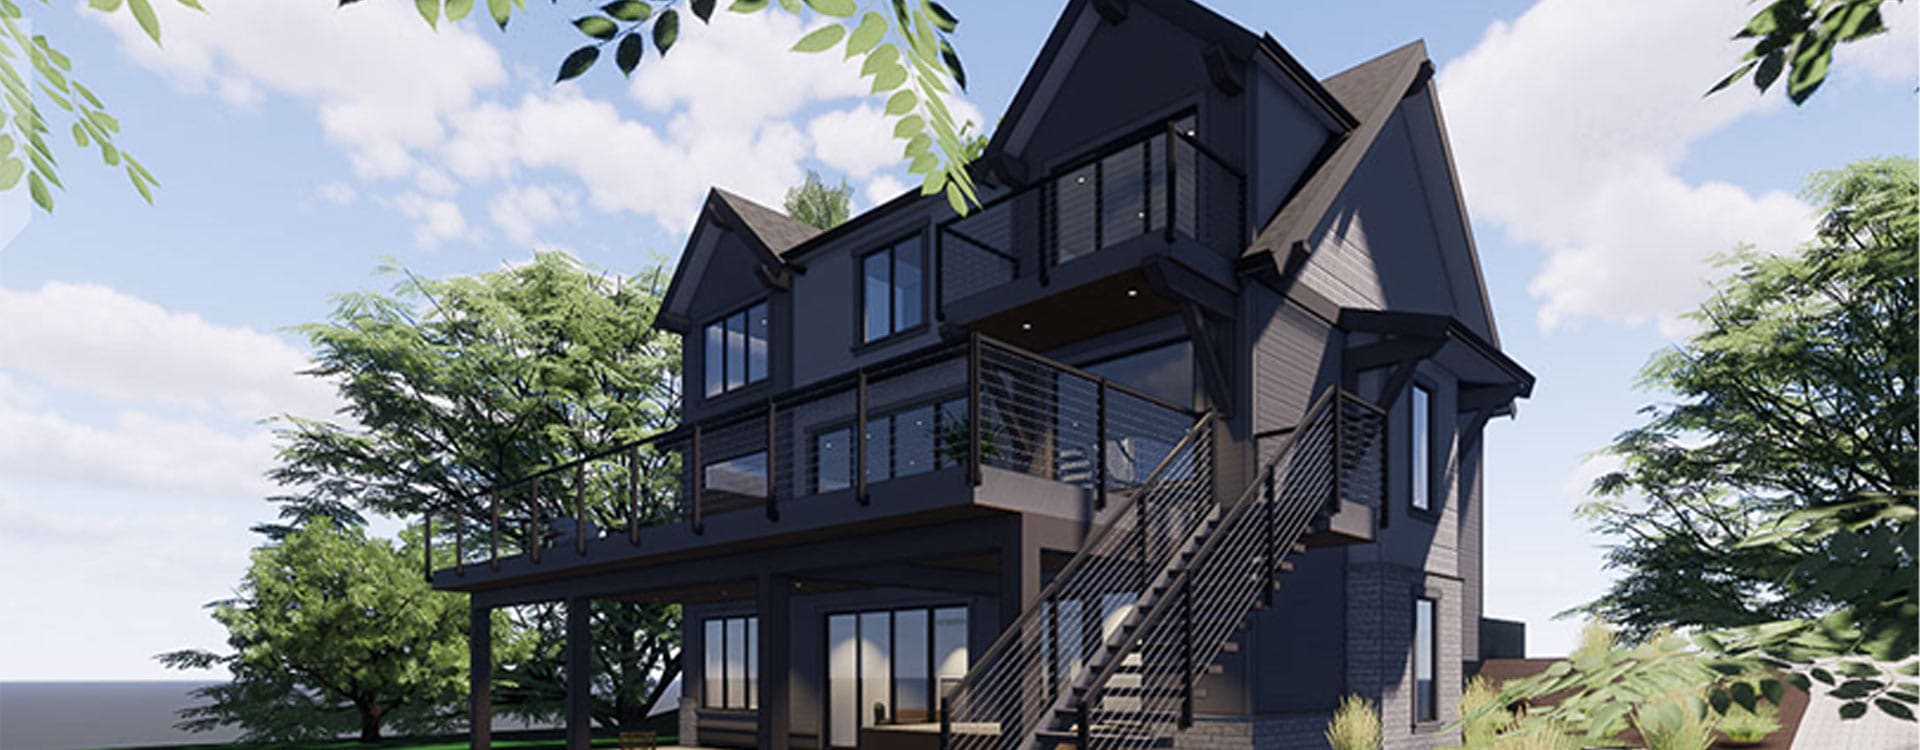 Shawnigan Lake Custom Home concept rendering